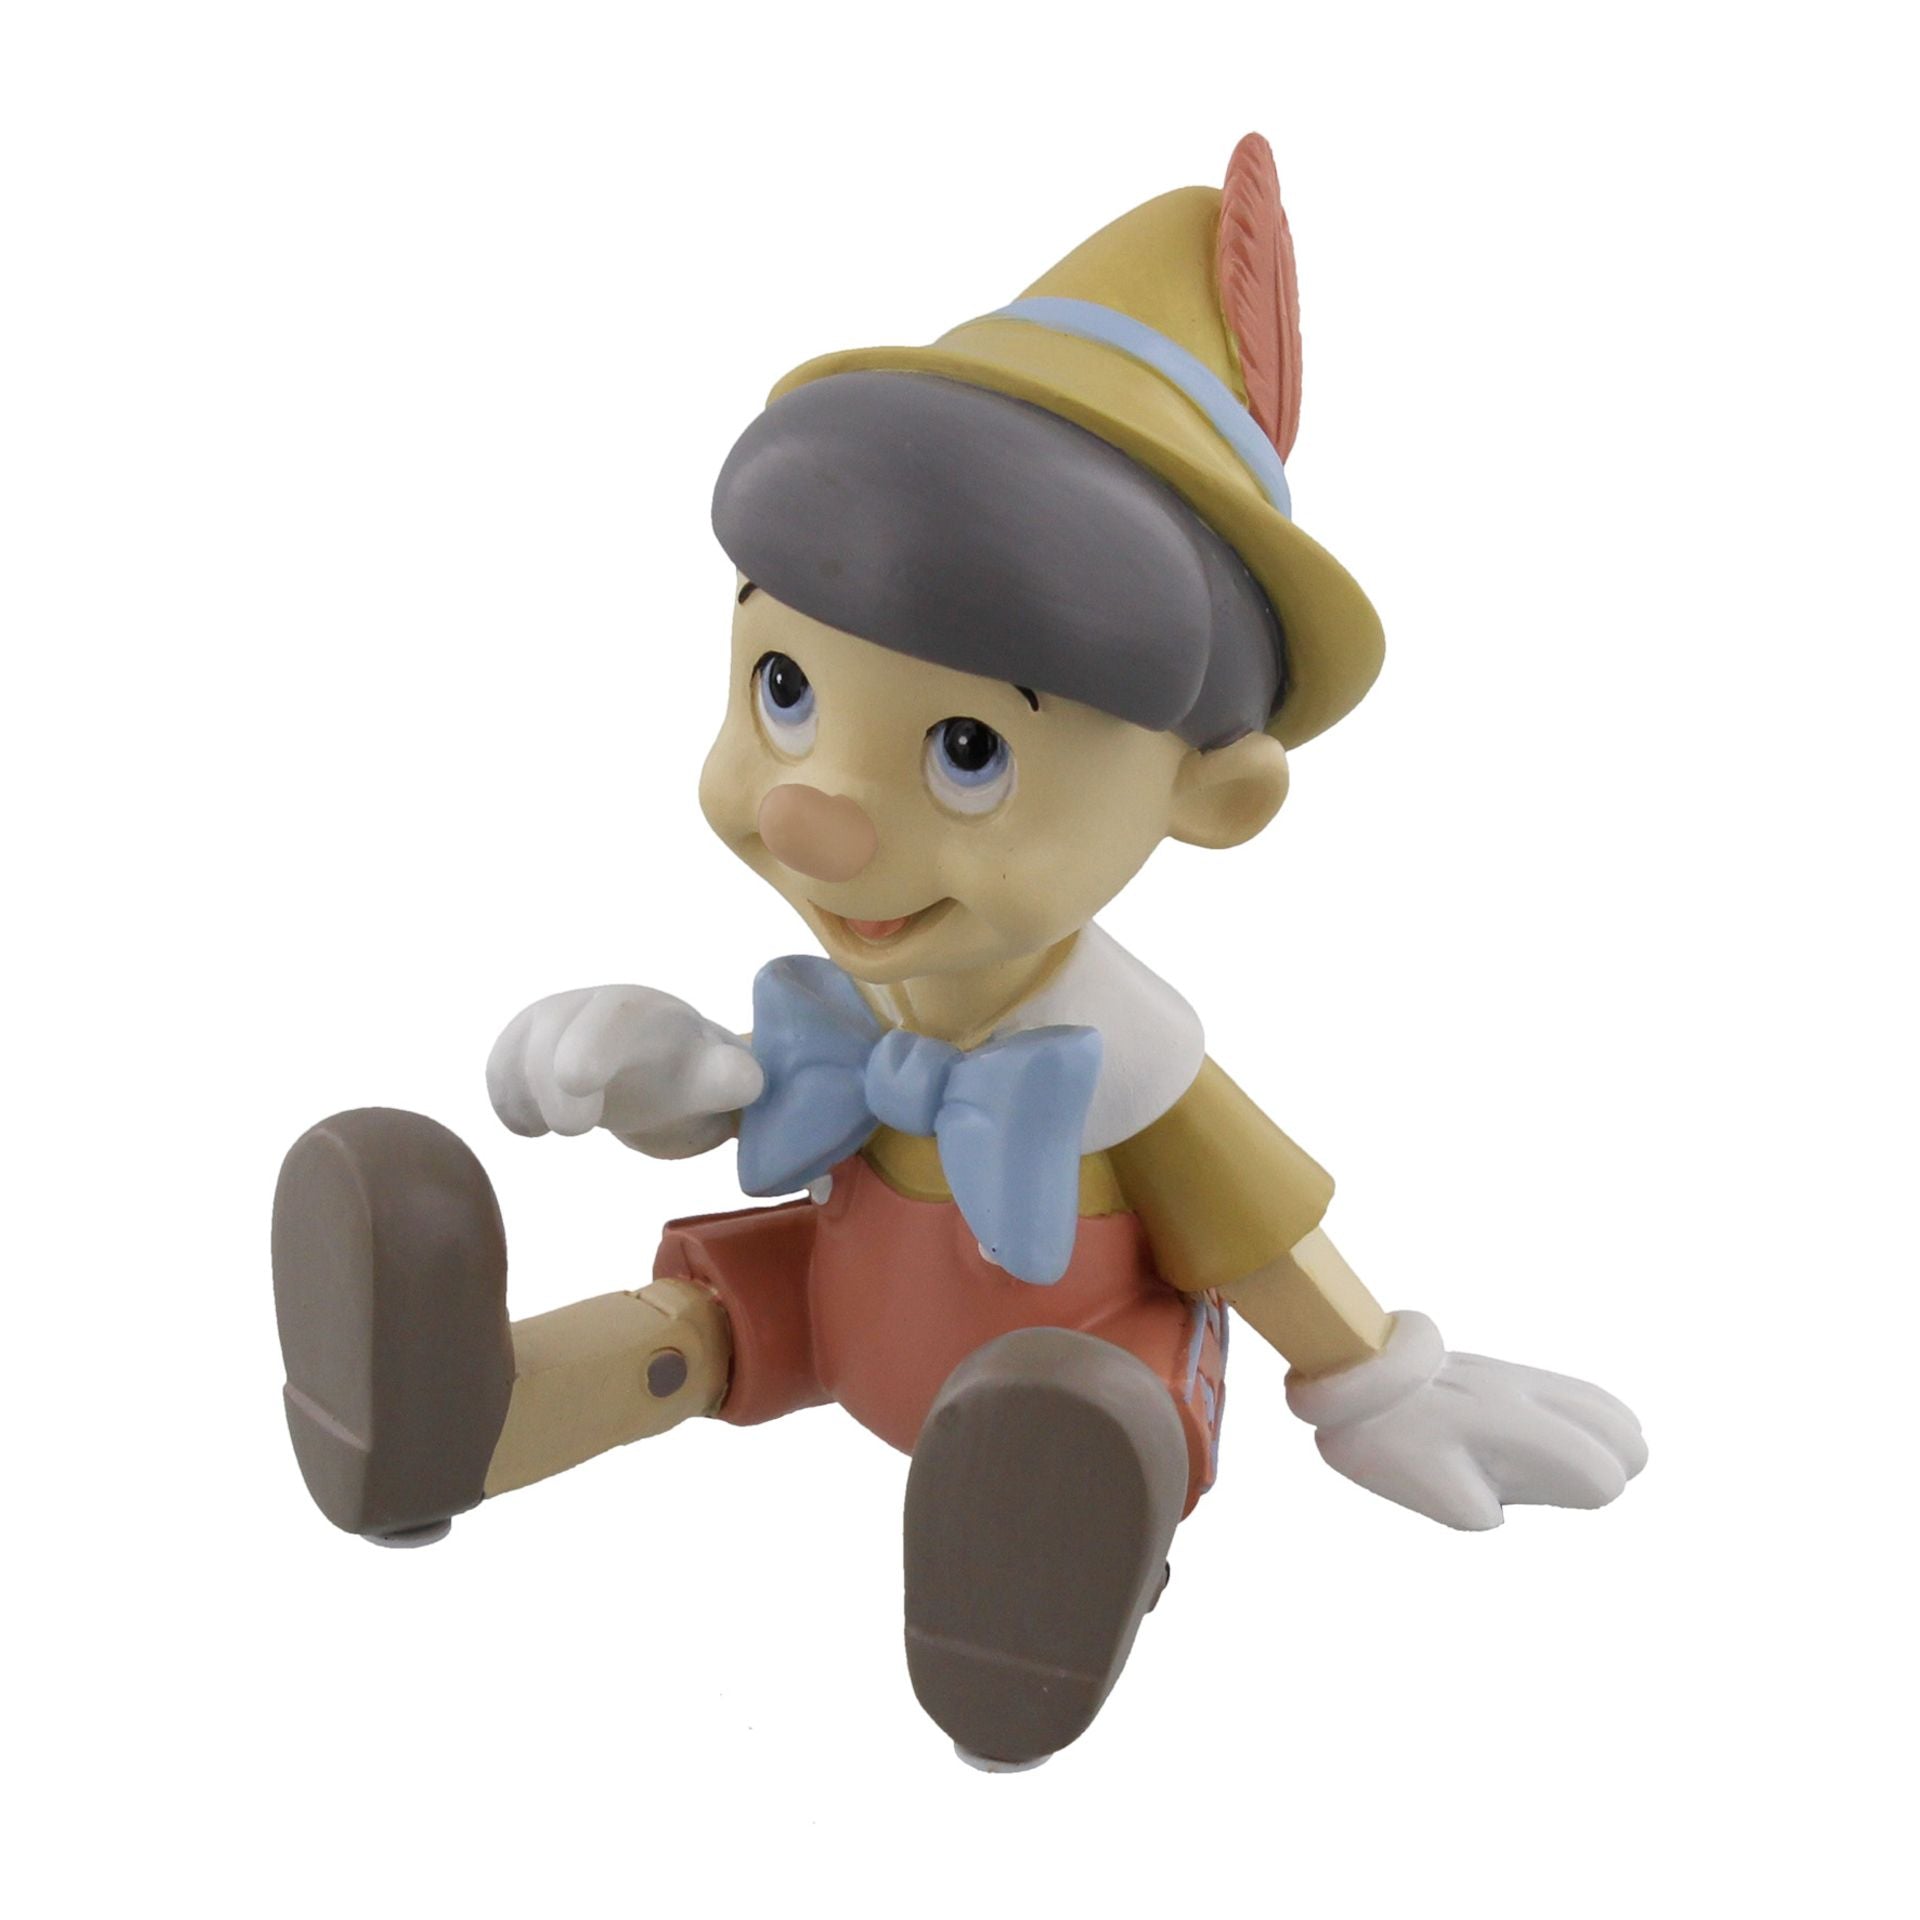 Pinocchio - Make a wish – With Love